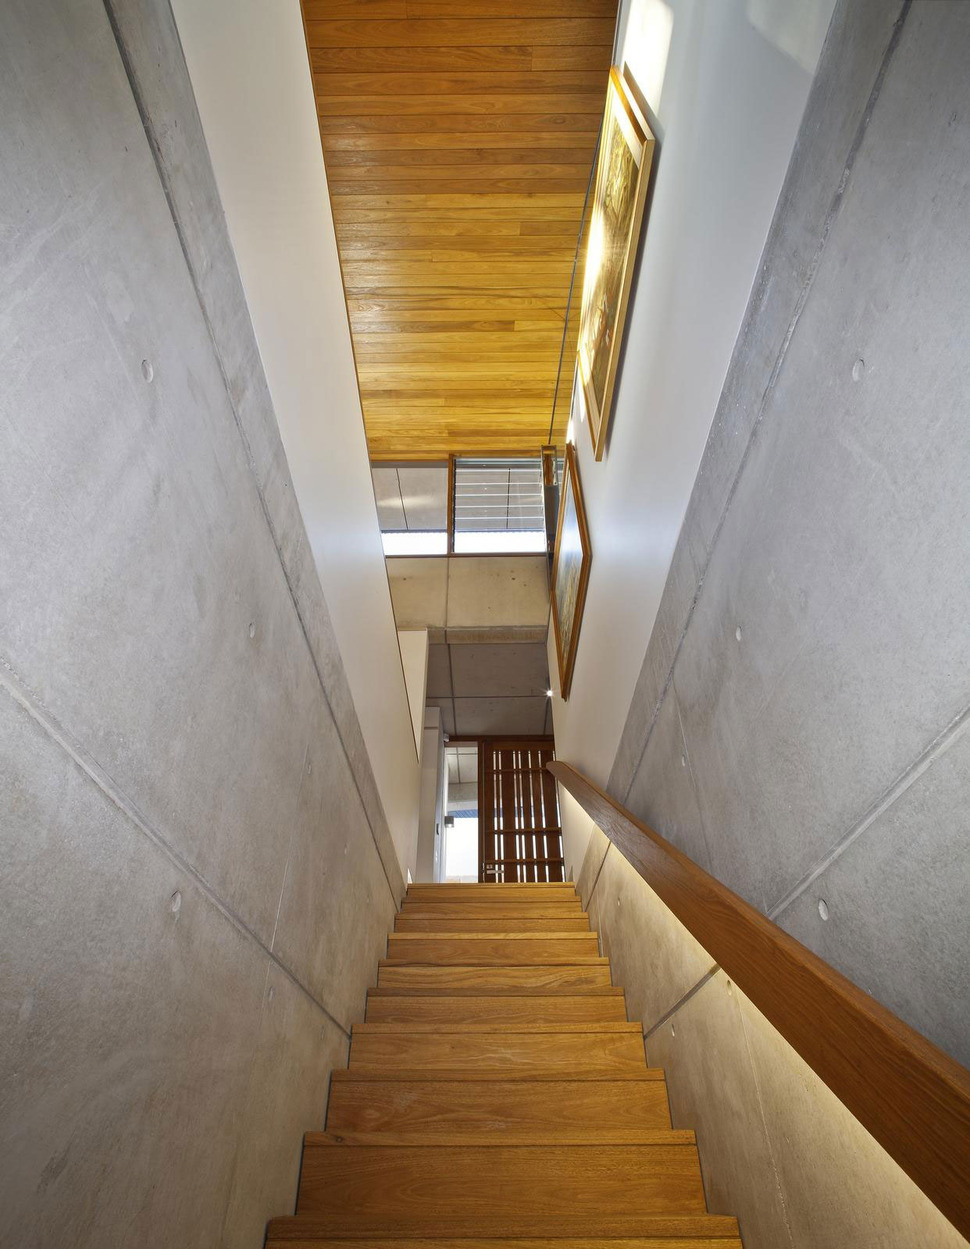 ceiling-wave-upstairs-boulder-wall-downstairs-11-stairs.jpg